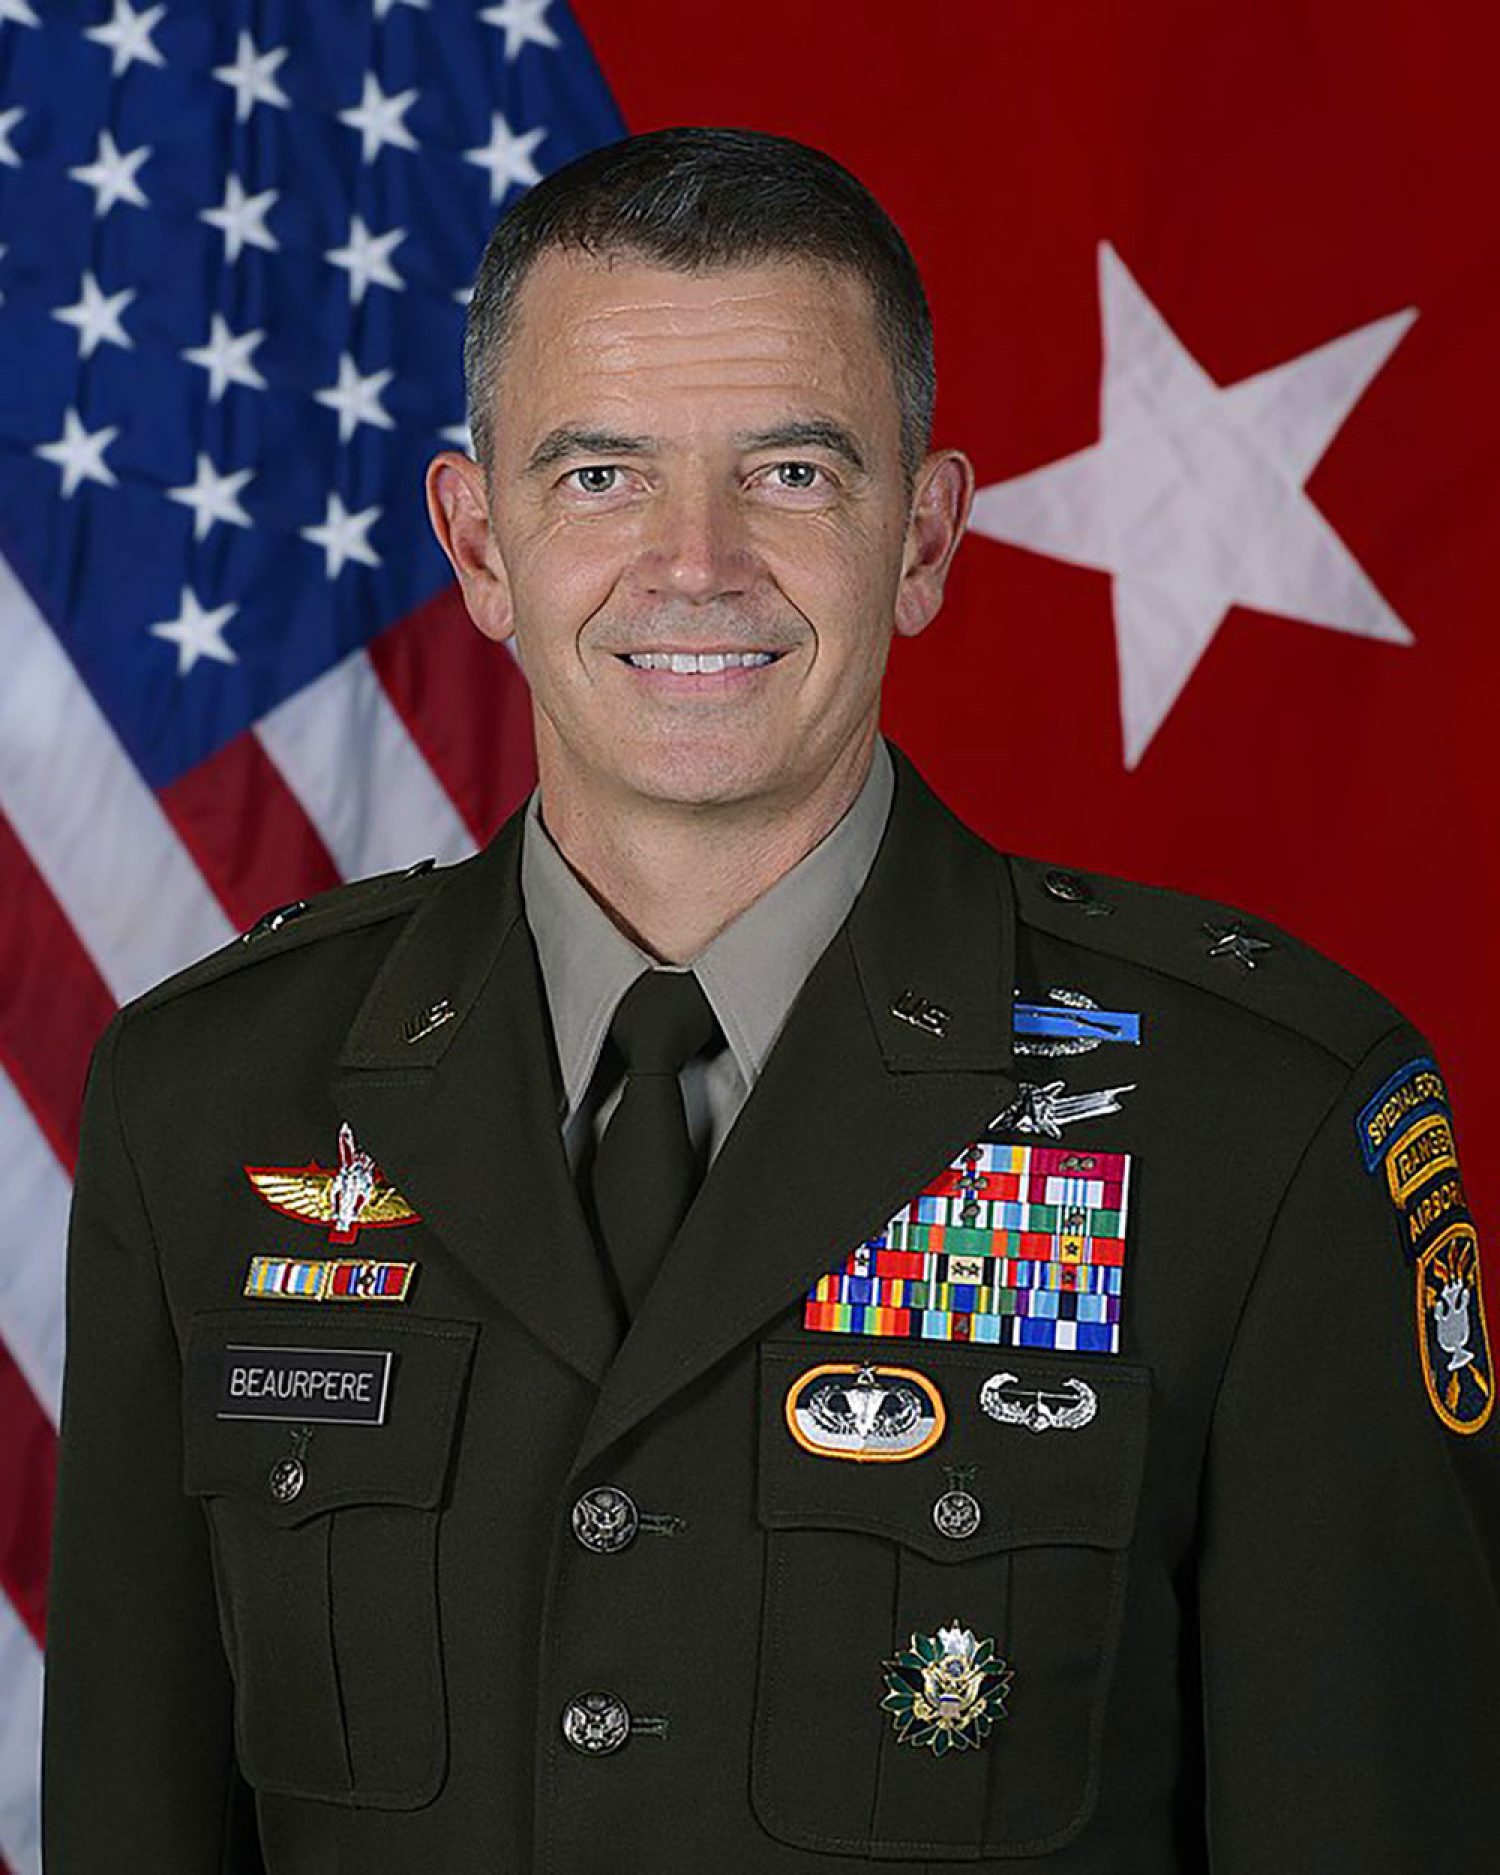 Brigadier General Guillaume N. Beaurpere ’94